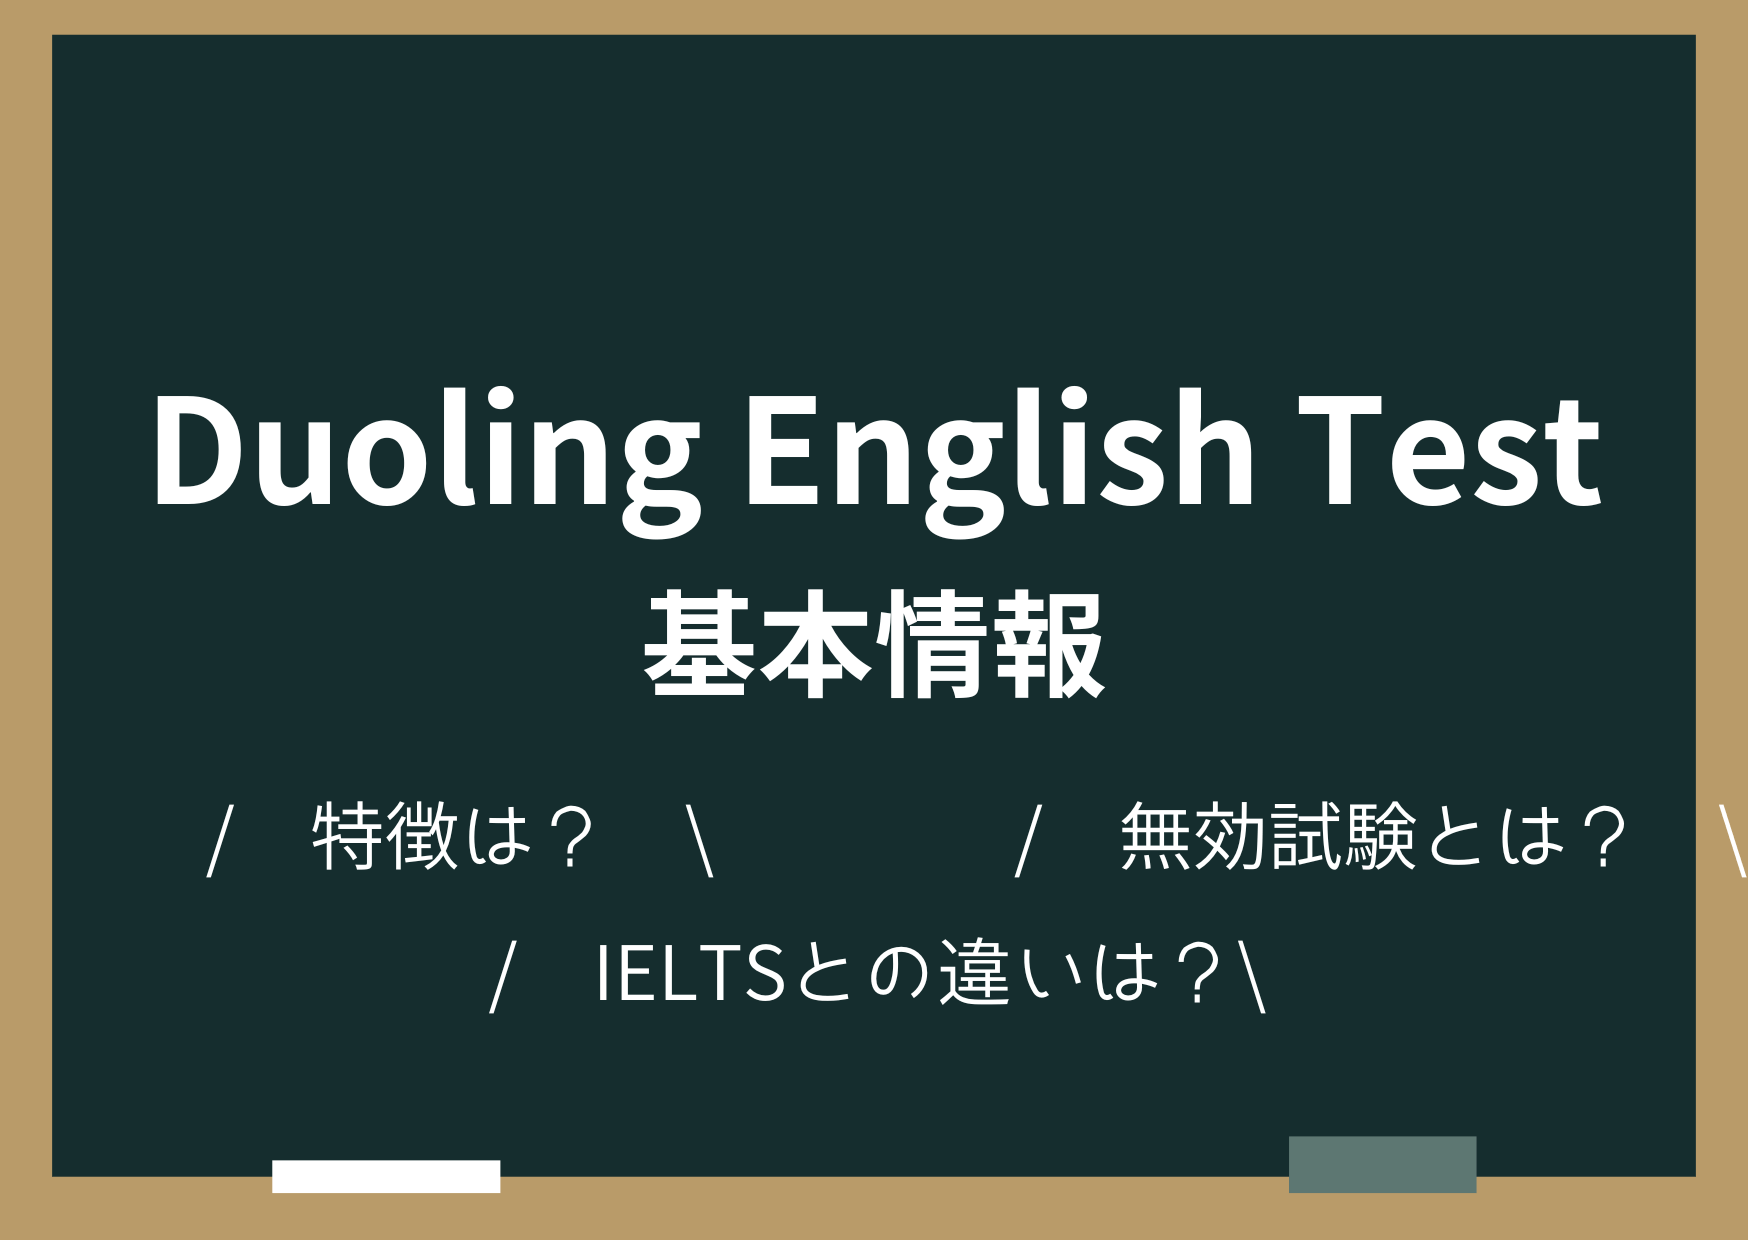 Duoling English Test基本情報｜無効試験を防ぐコツ